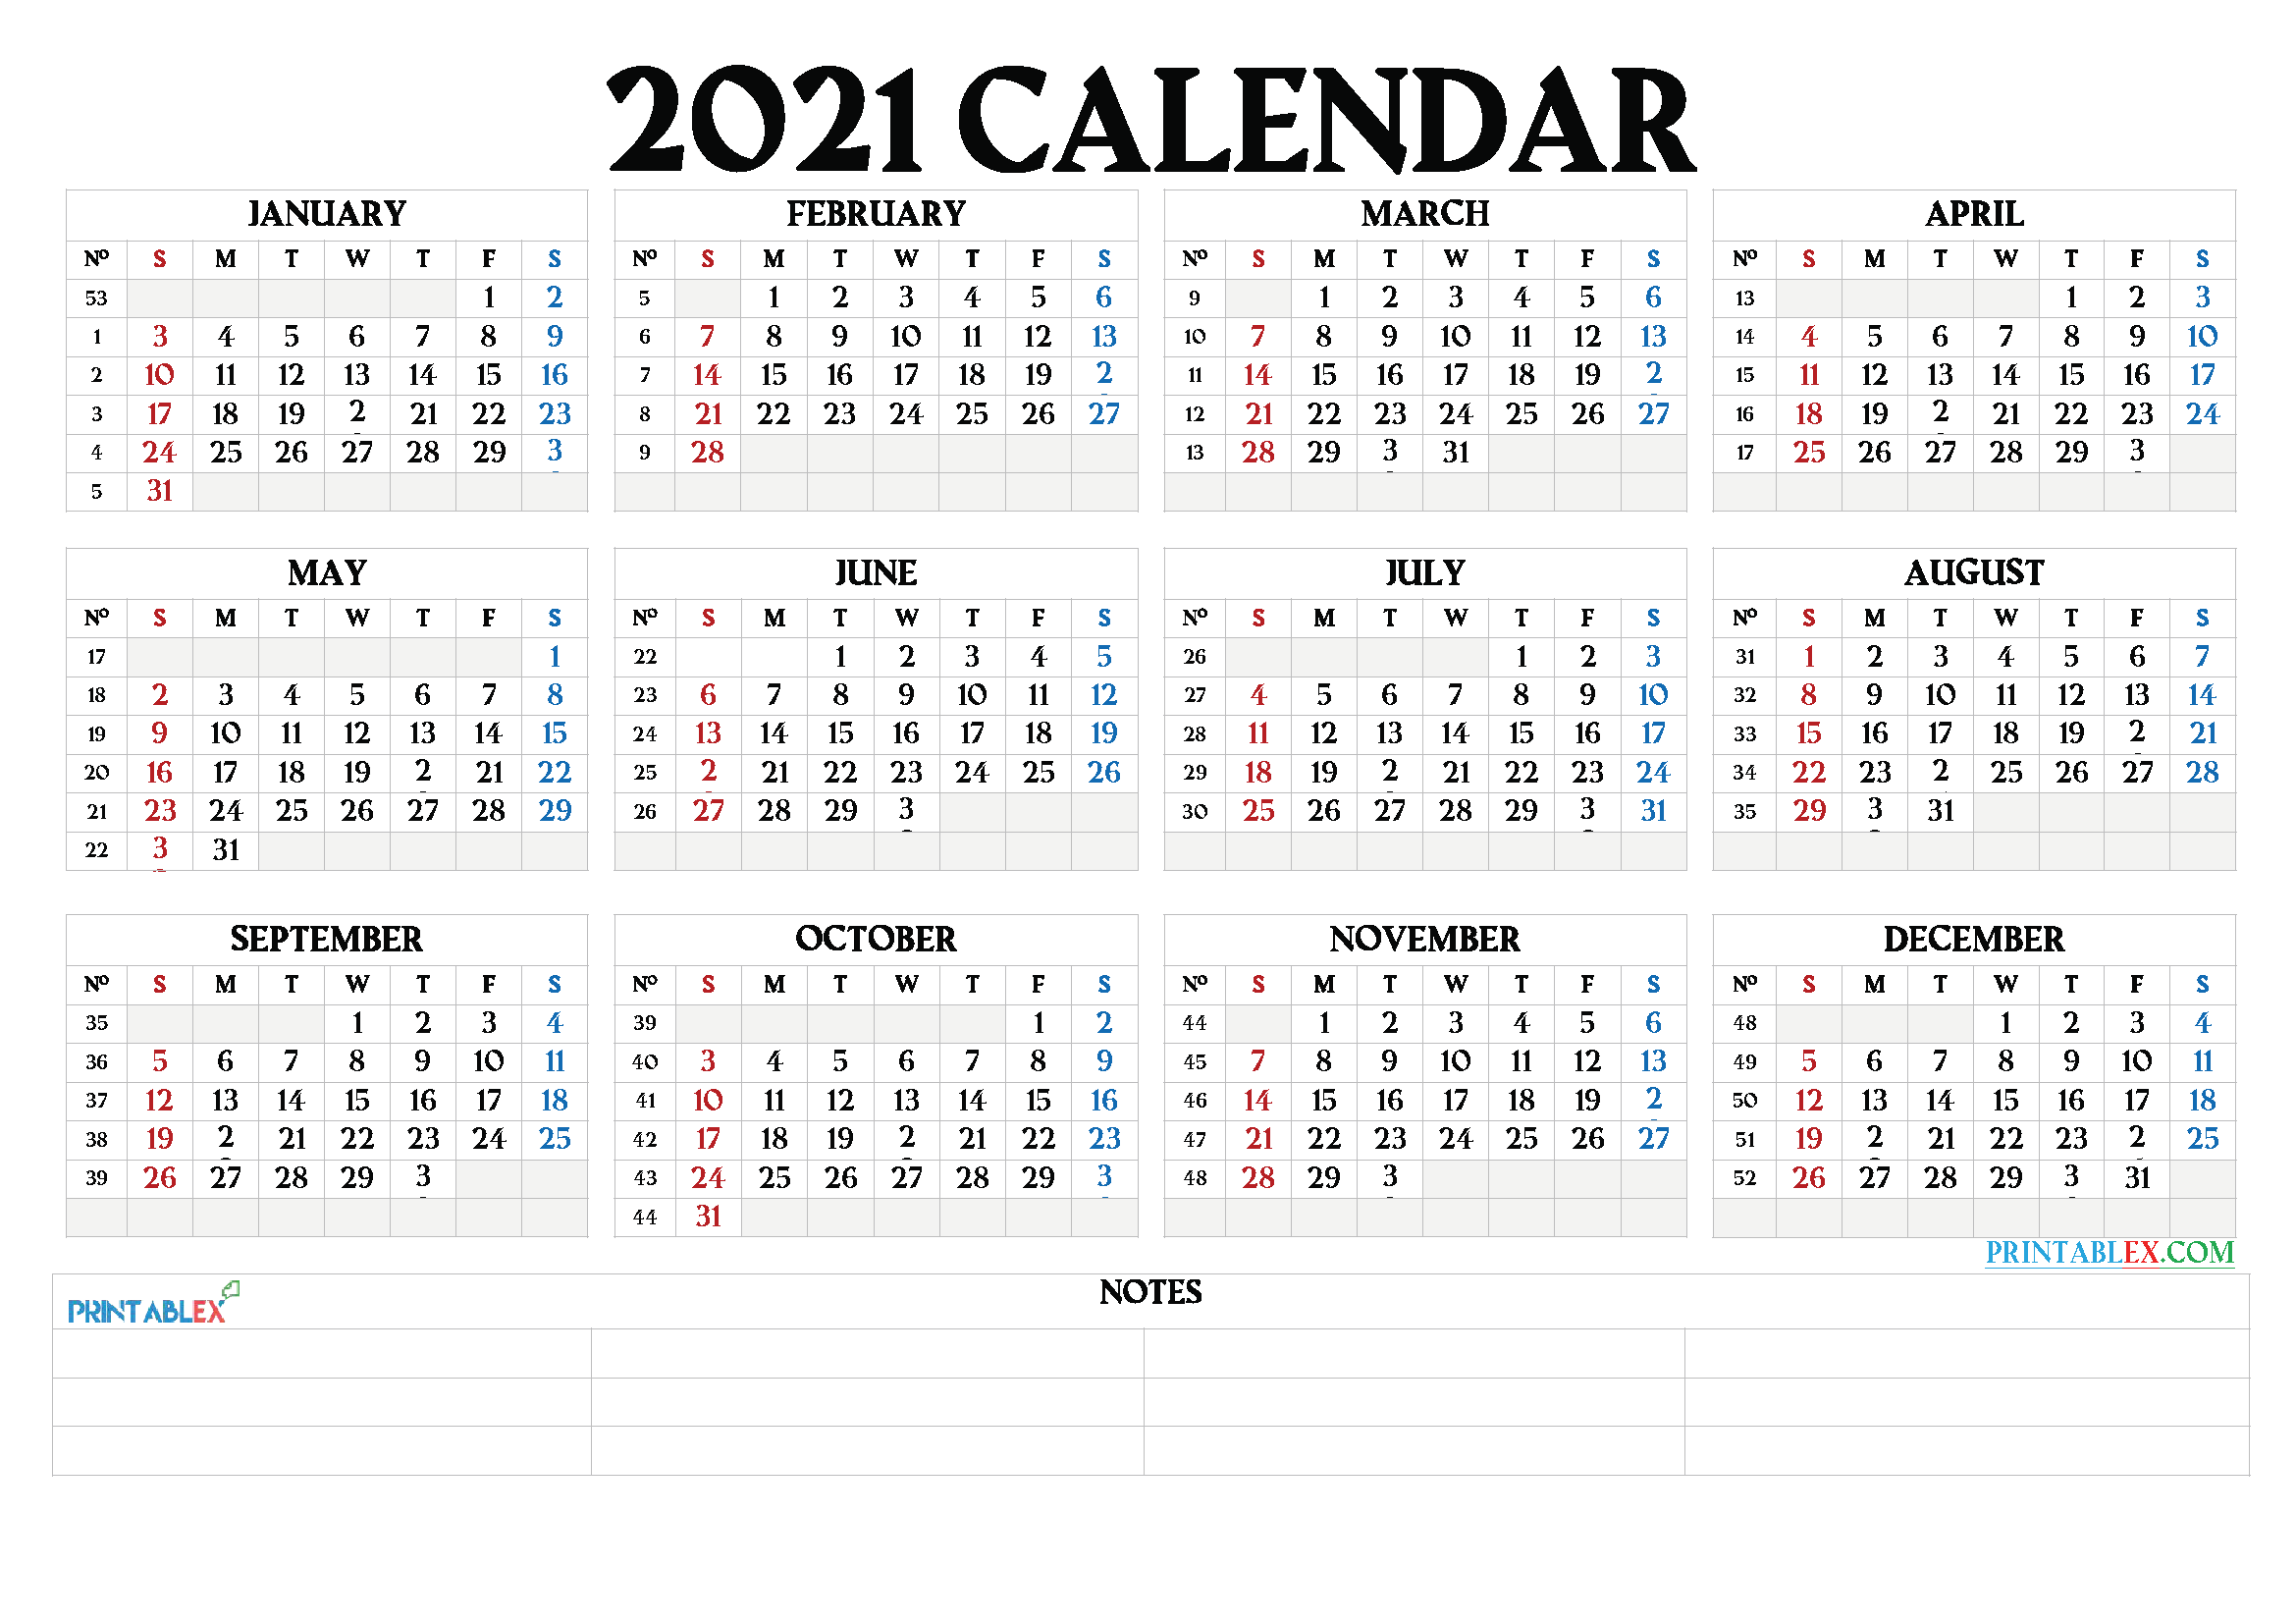 Free Printable 2021 Calendar by Year